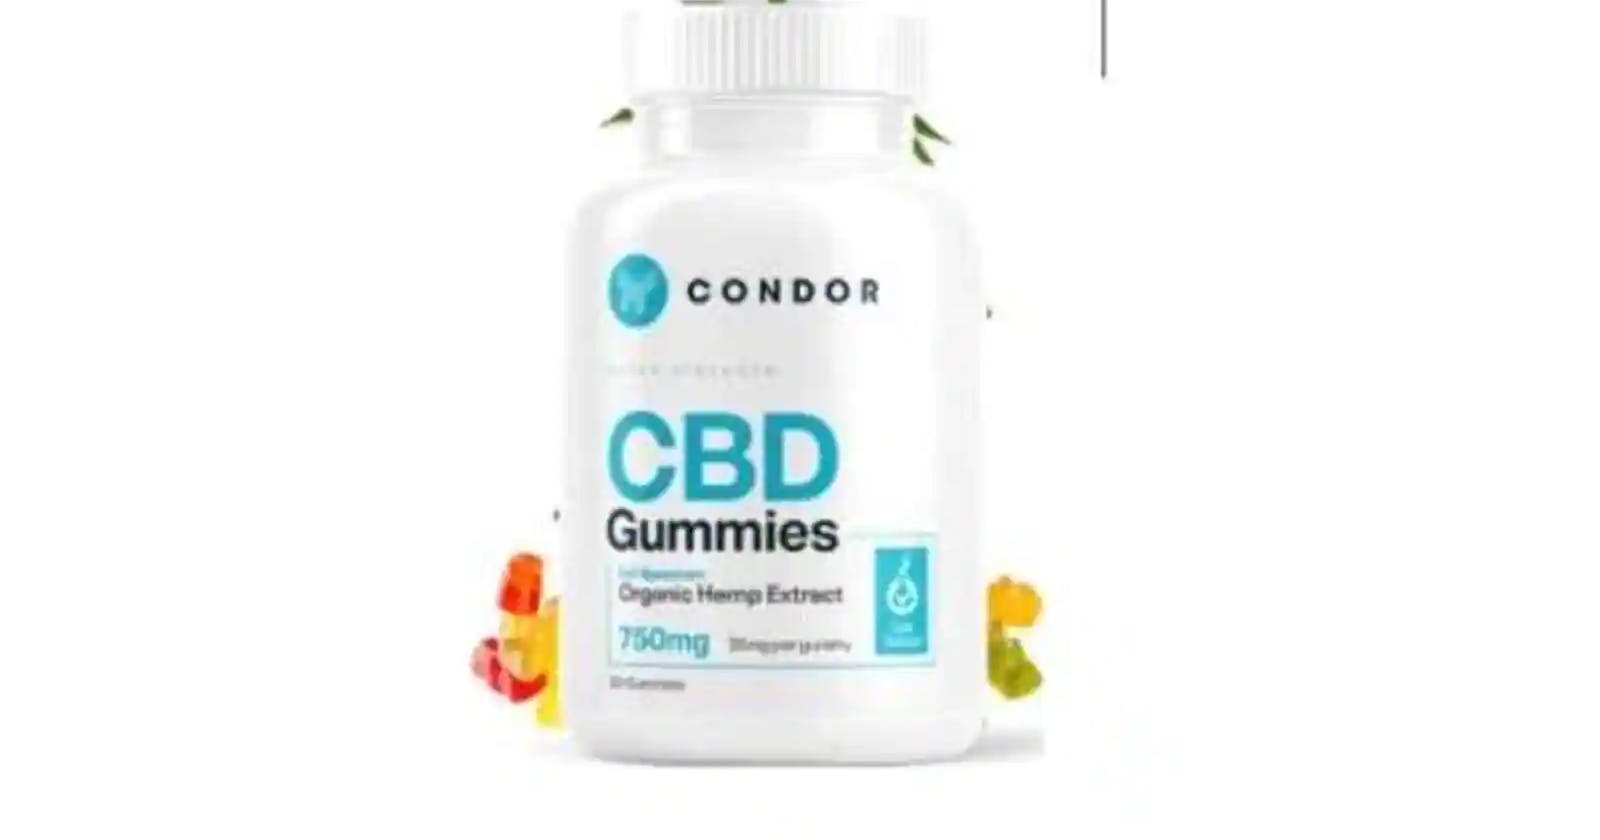 Condor CBD Gummies Review: Is It Legit? Disturbing Customer Side Effects Risk?